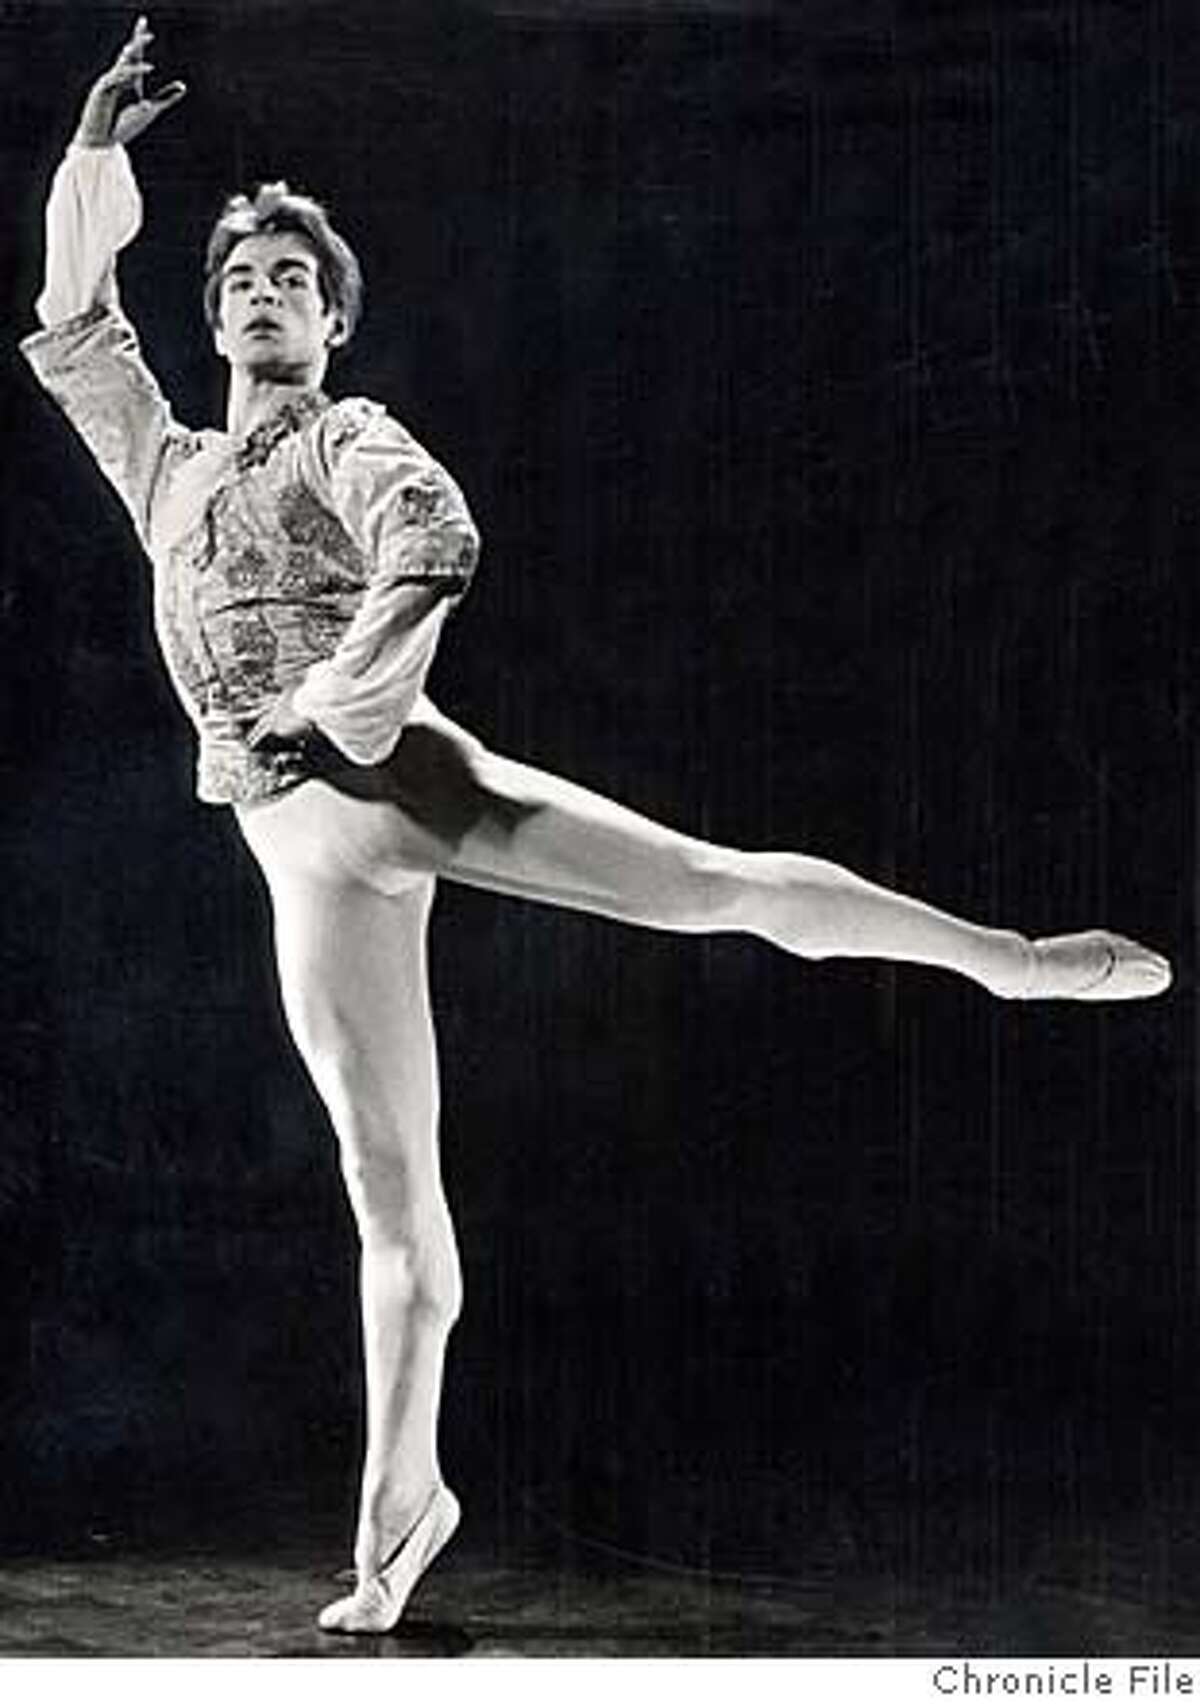 NUREYEV/C/16JUL99/MN/HO--Rudolf Nureyev Russian ballwr dancer. Chronicle file photo of 1970's ALSO RAN 12/26/02, 1/1/03 CAT